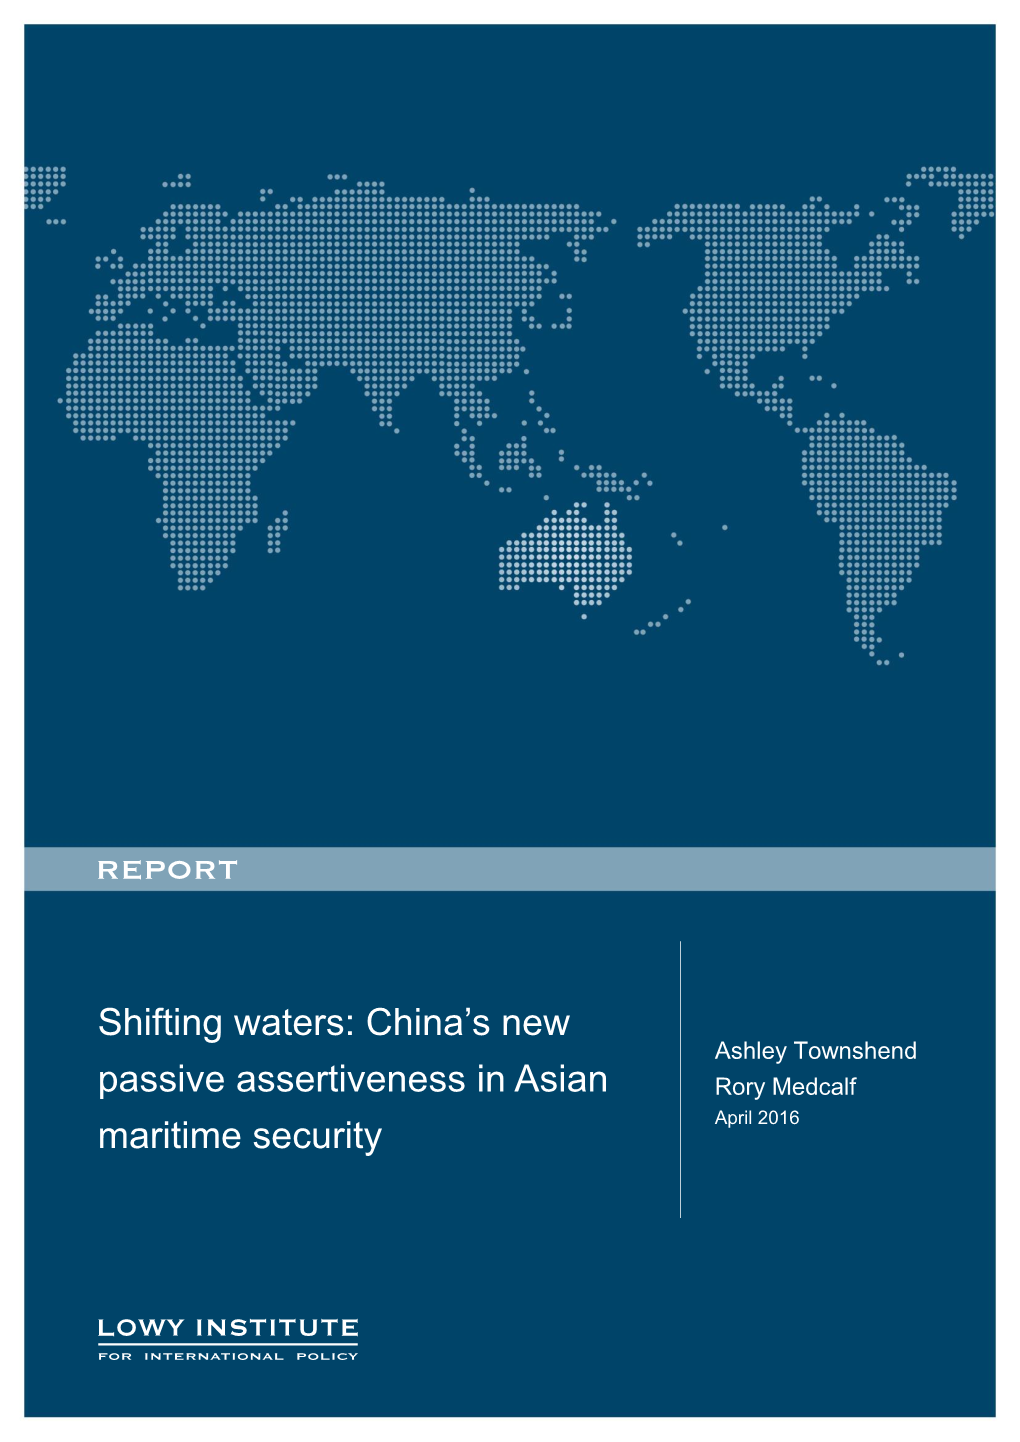 Shifting Waters: China's New Passive Assertiveness In